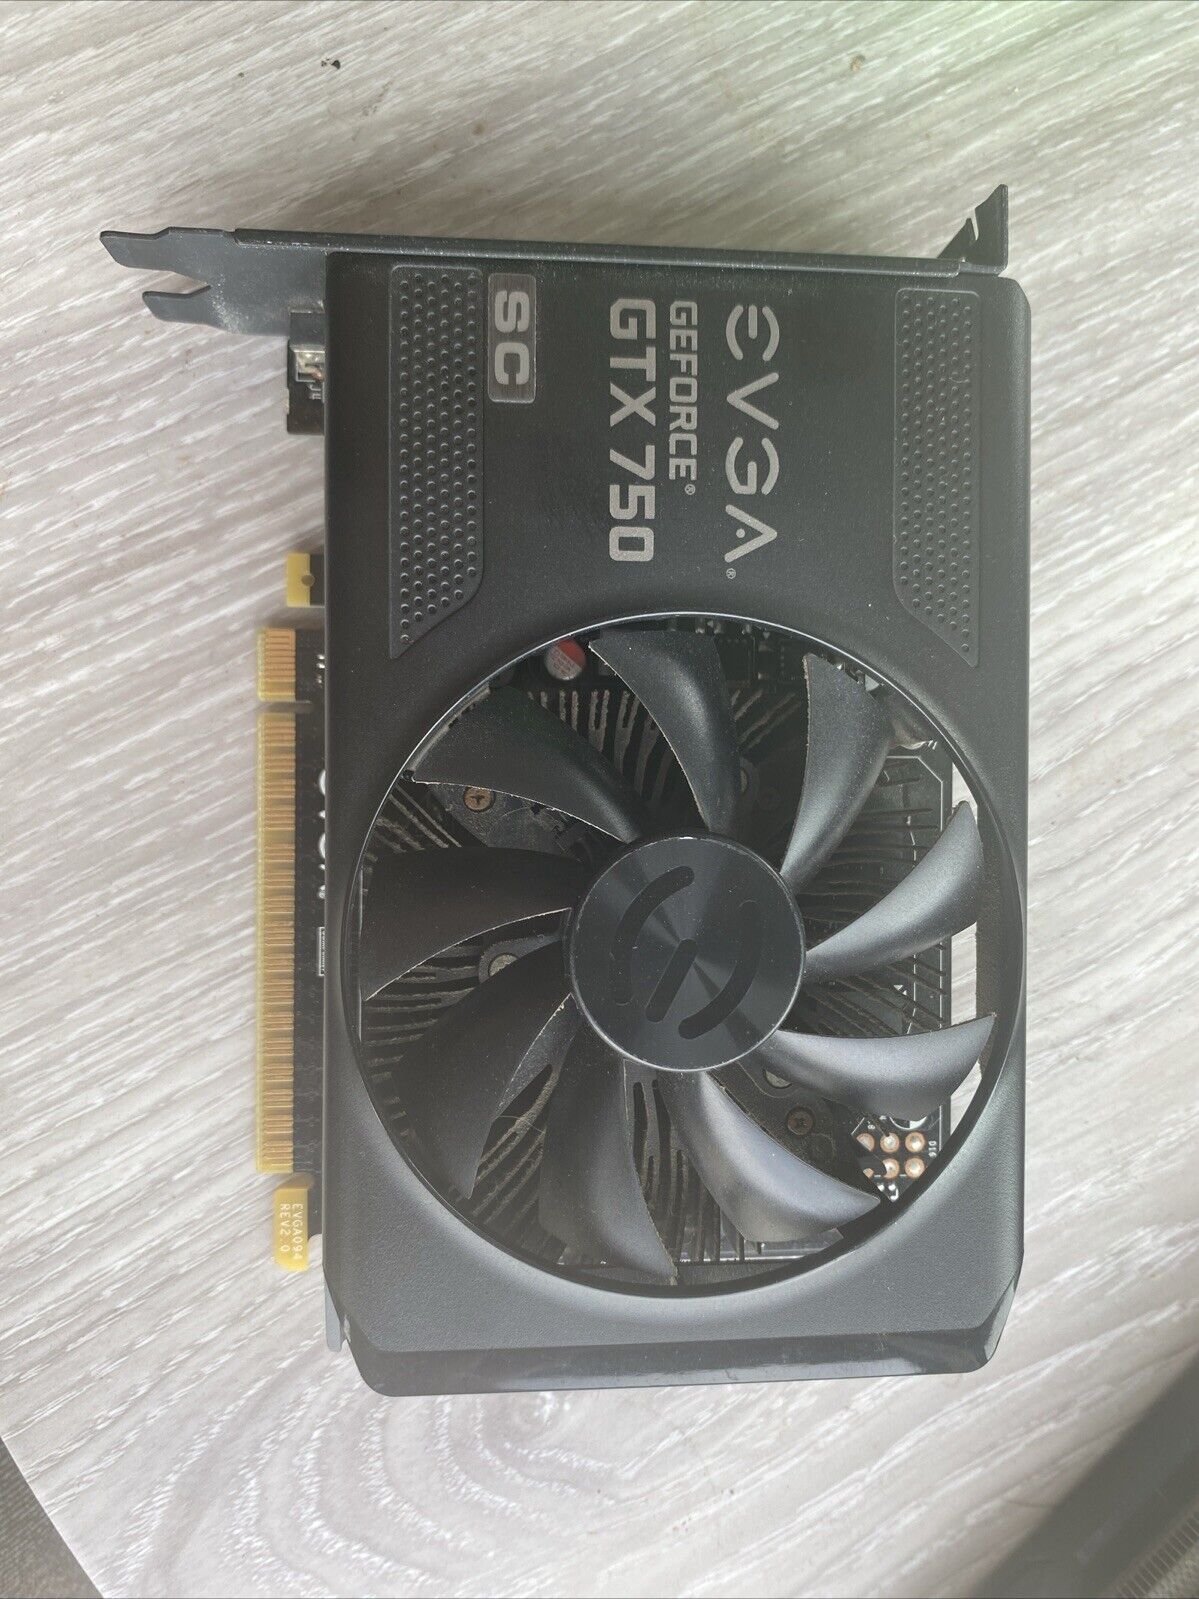 EVGA GeForce GTX 750Ti  2GB GDDR5 Graphic Card - 02G-P4-3753-KR Tested